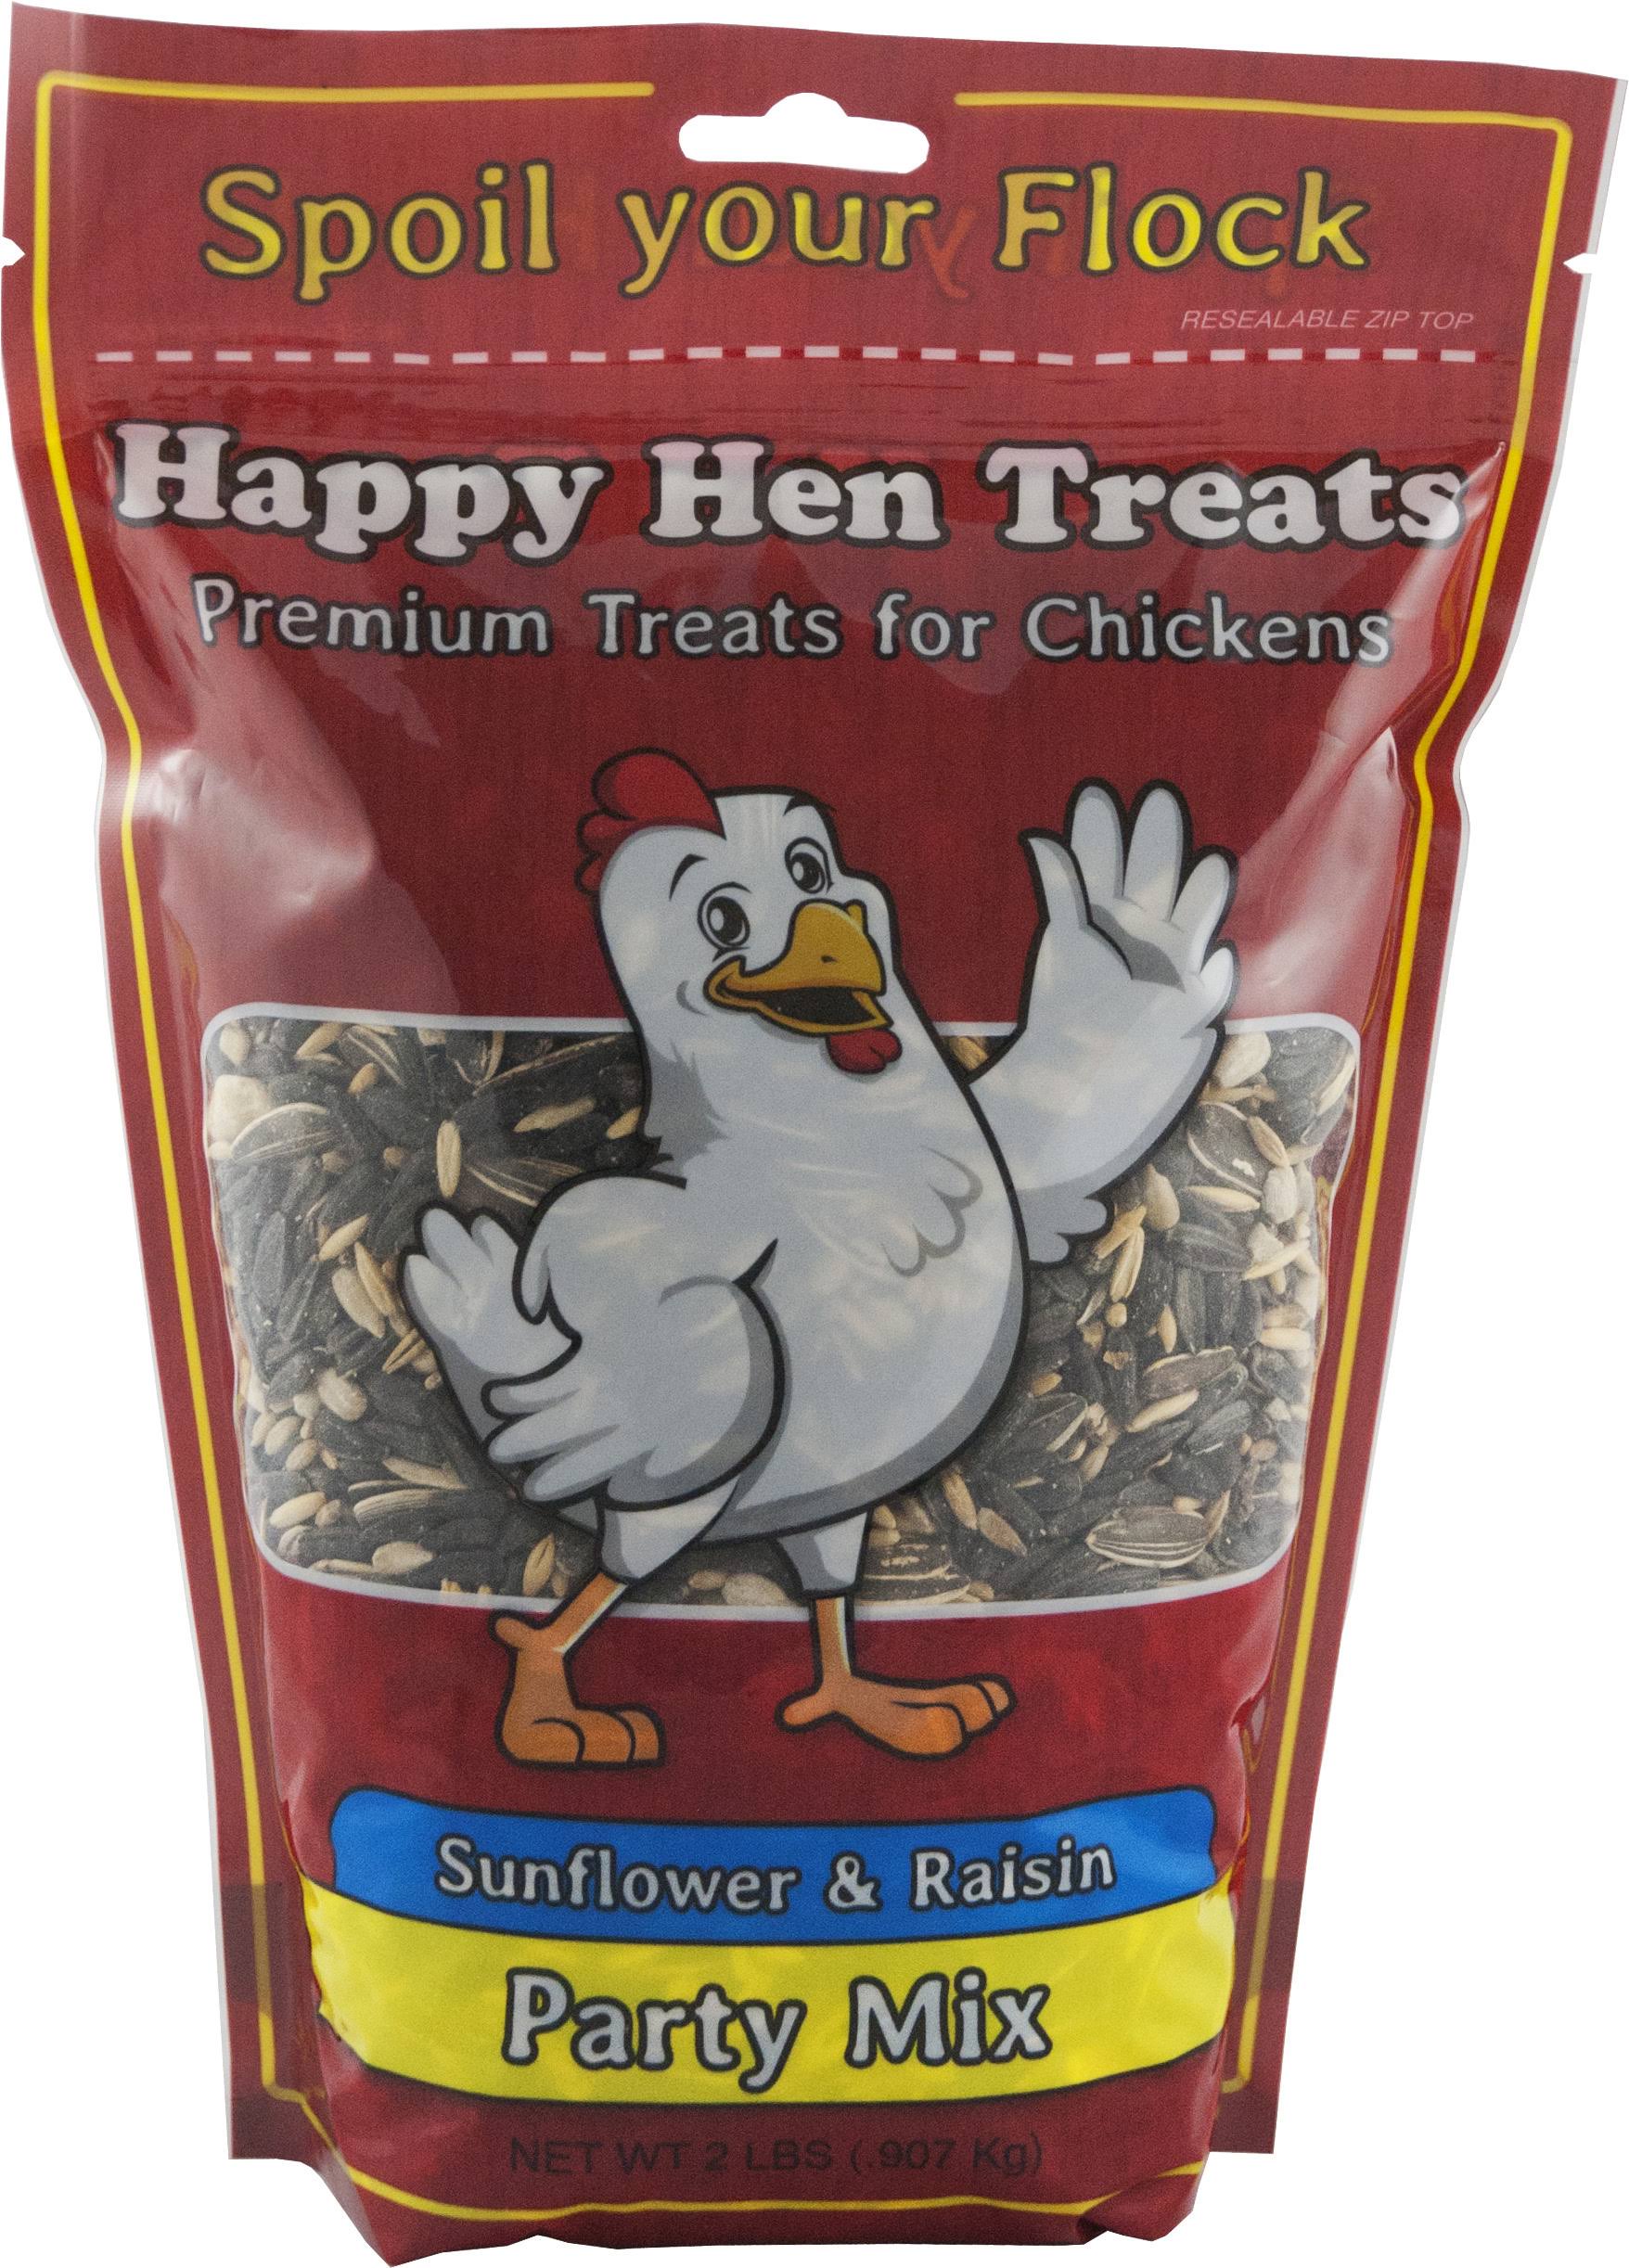 Happy Hen Treats Party Mix Sunflower & Raisin - 2lb